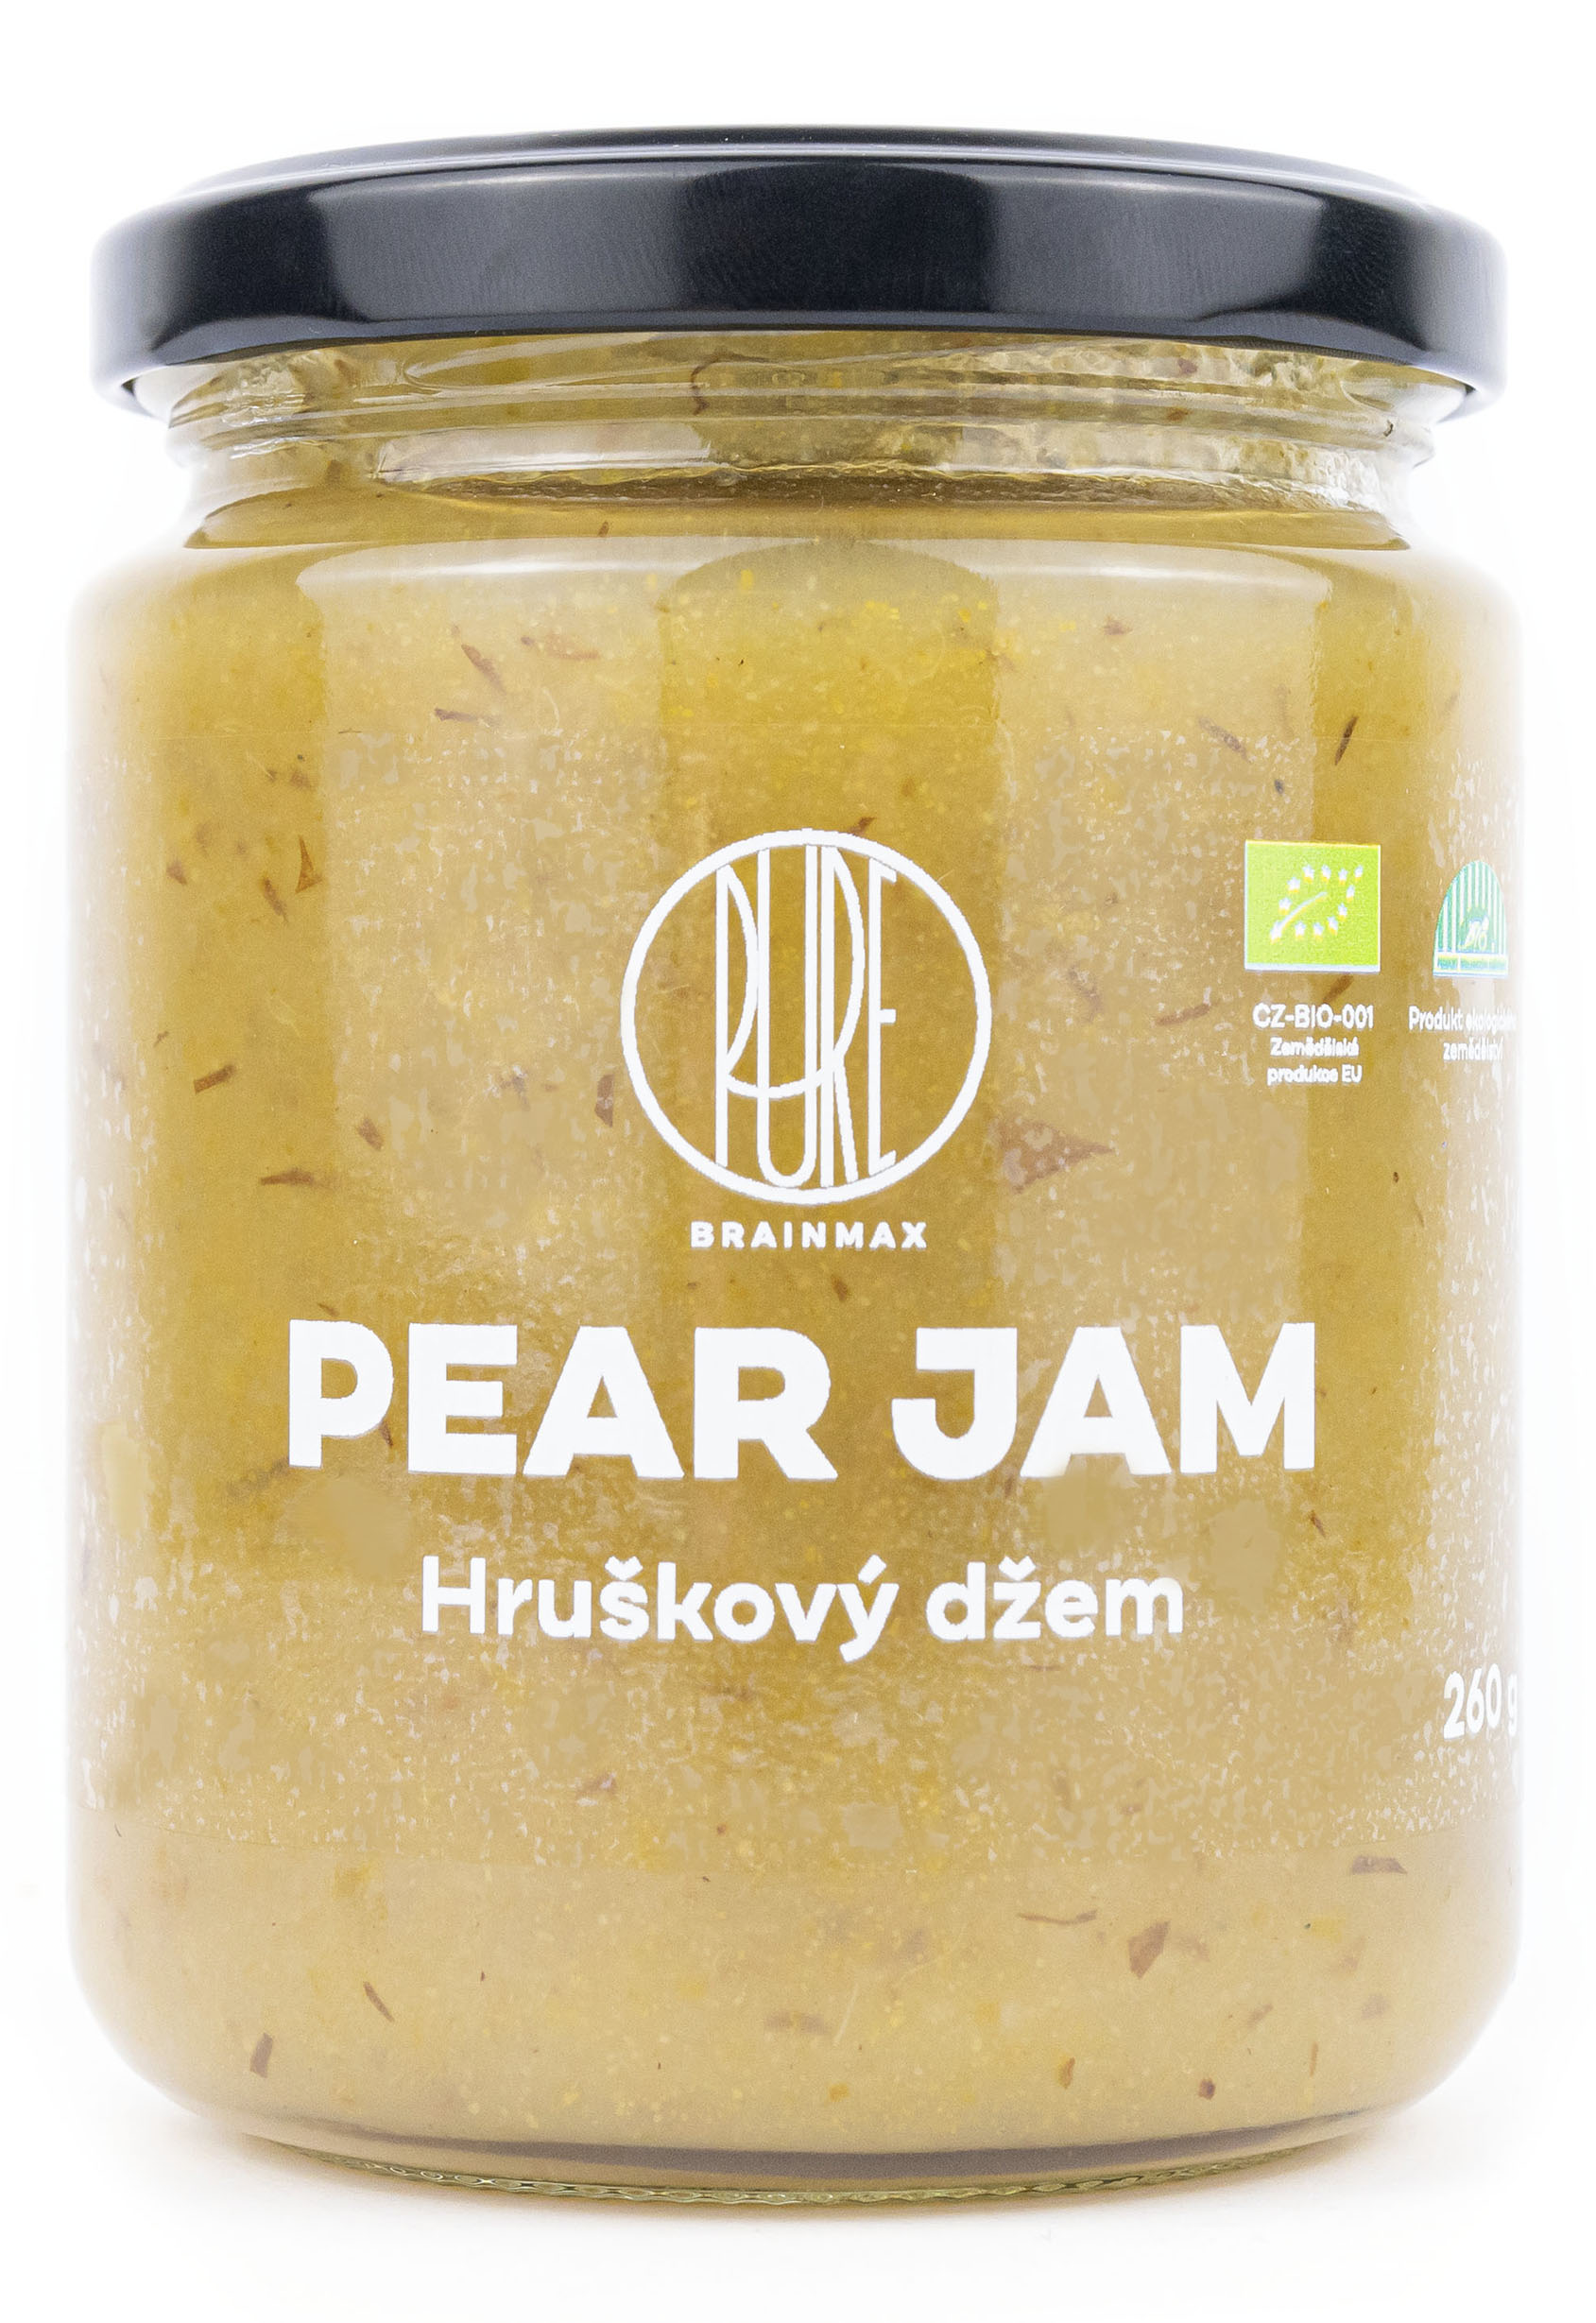 BrainMax Pure Pear Jam, Džem Hruška BIO, 260g *CZ-BIO-001 certifikát